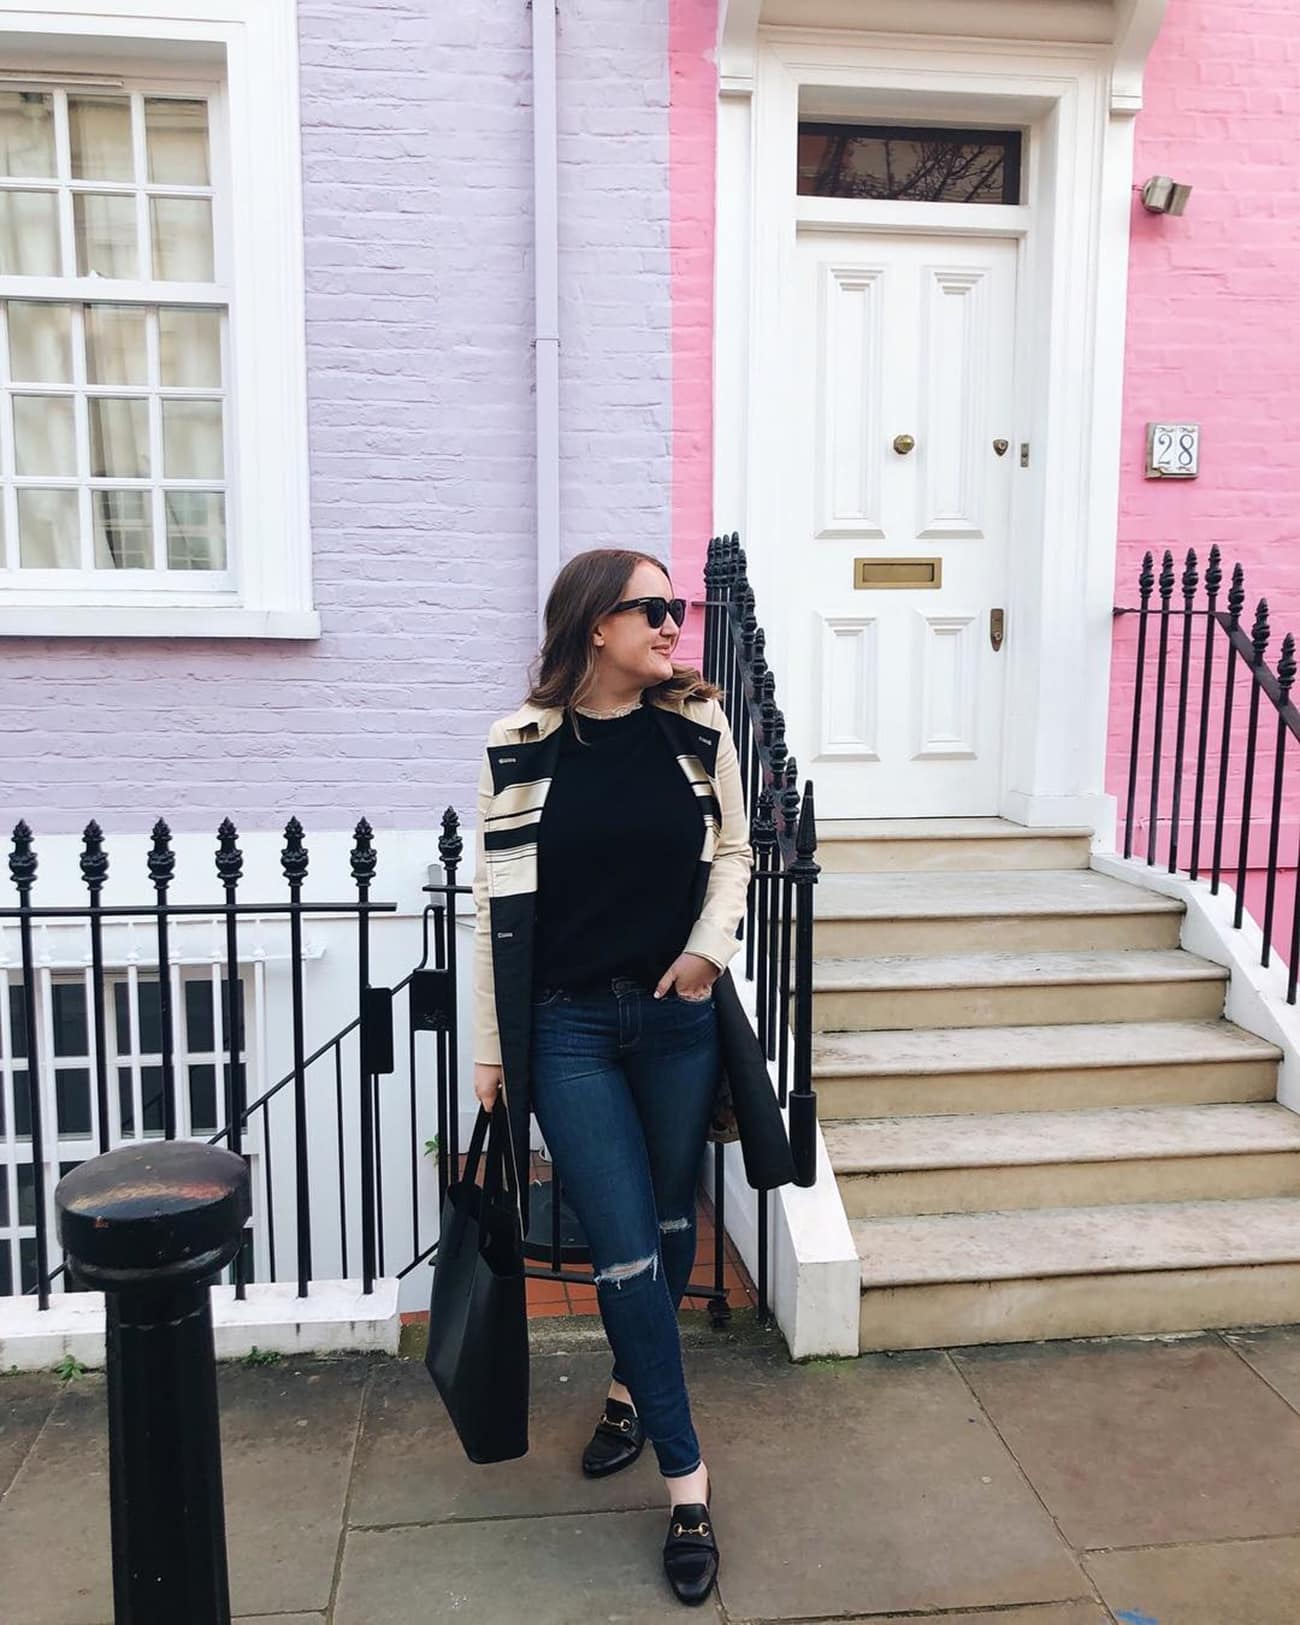 The Most Instagram-Worthy Spots in London I BYWATER STREET IN CHELSEA